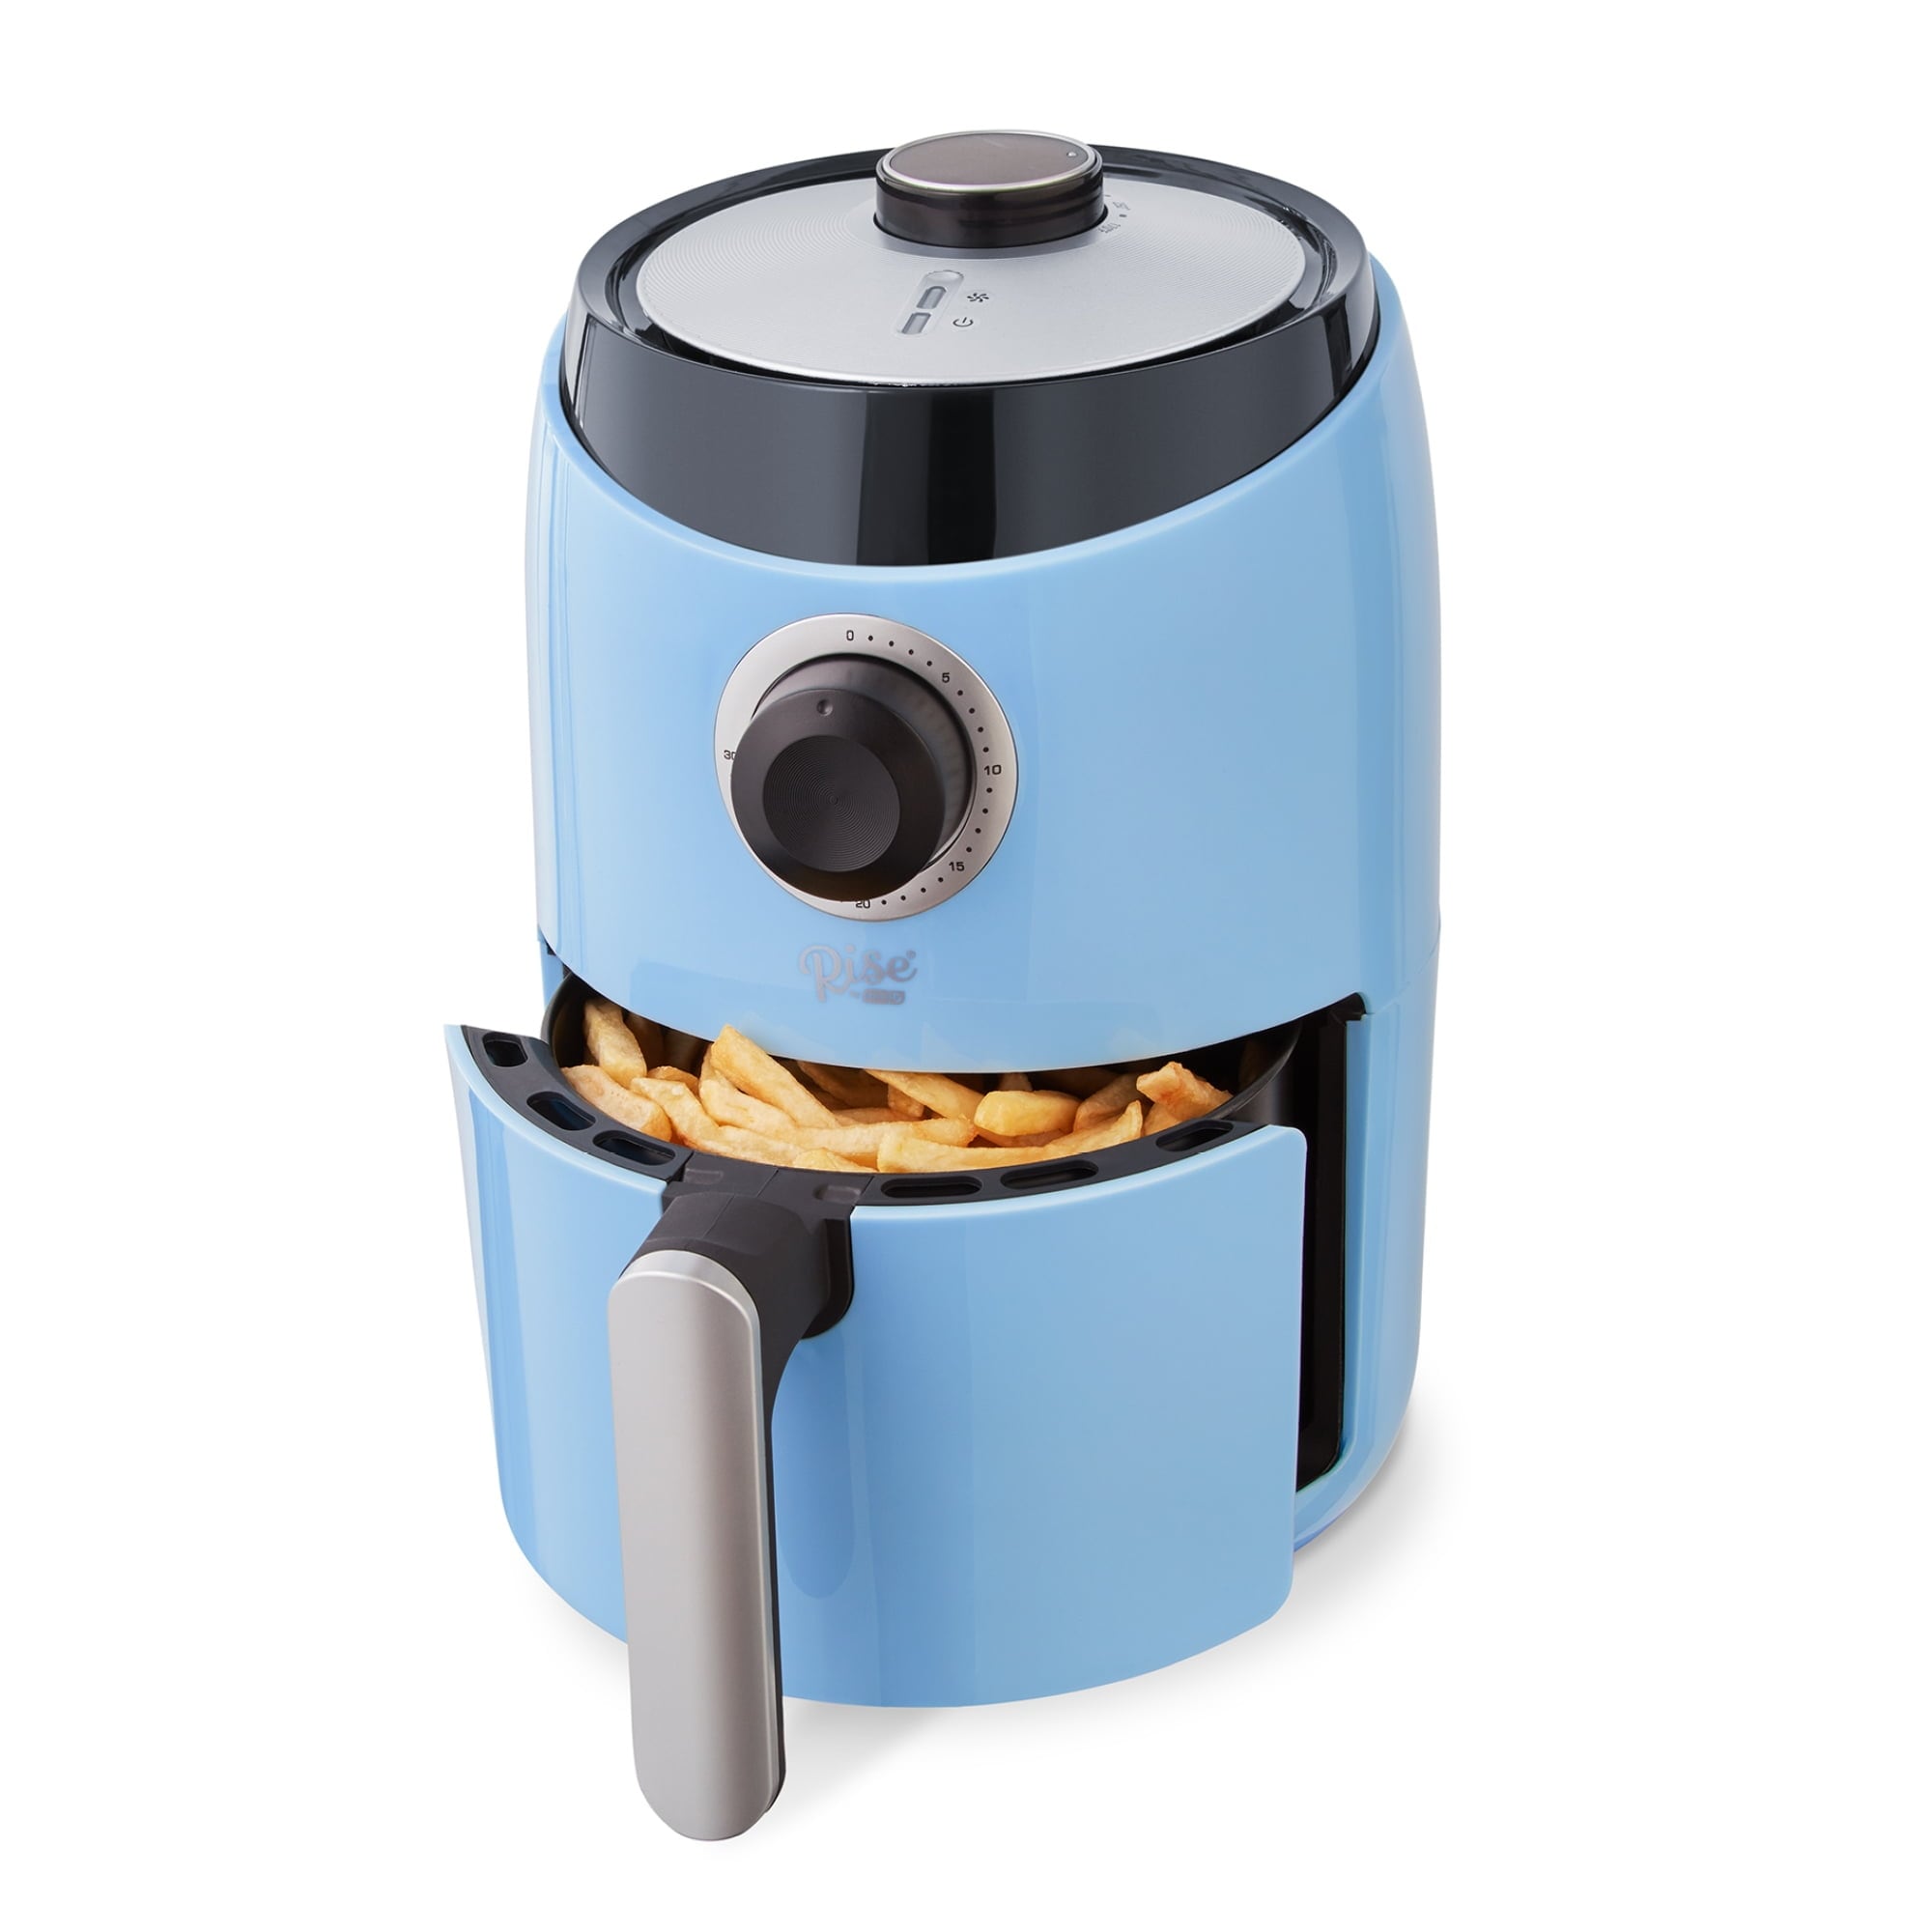  DASH Compact Air Fryer Oven Cooker with Temperature Control,  Non-stick Fry Basket, Recipe Guide + Auto Shut off Feature, 2 Quart - Aqua  : Home & Kitchen